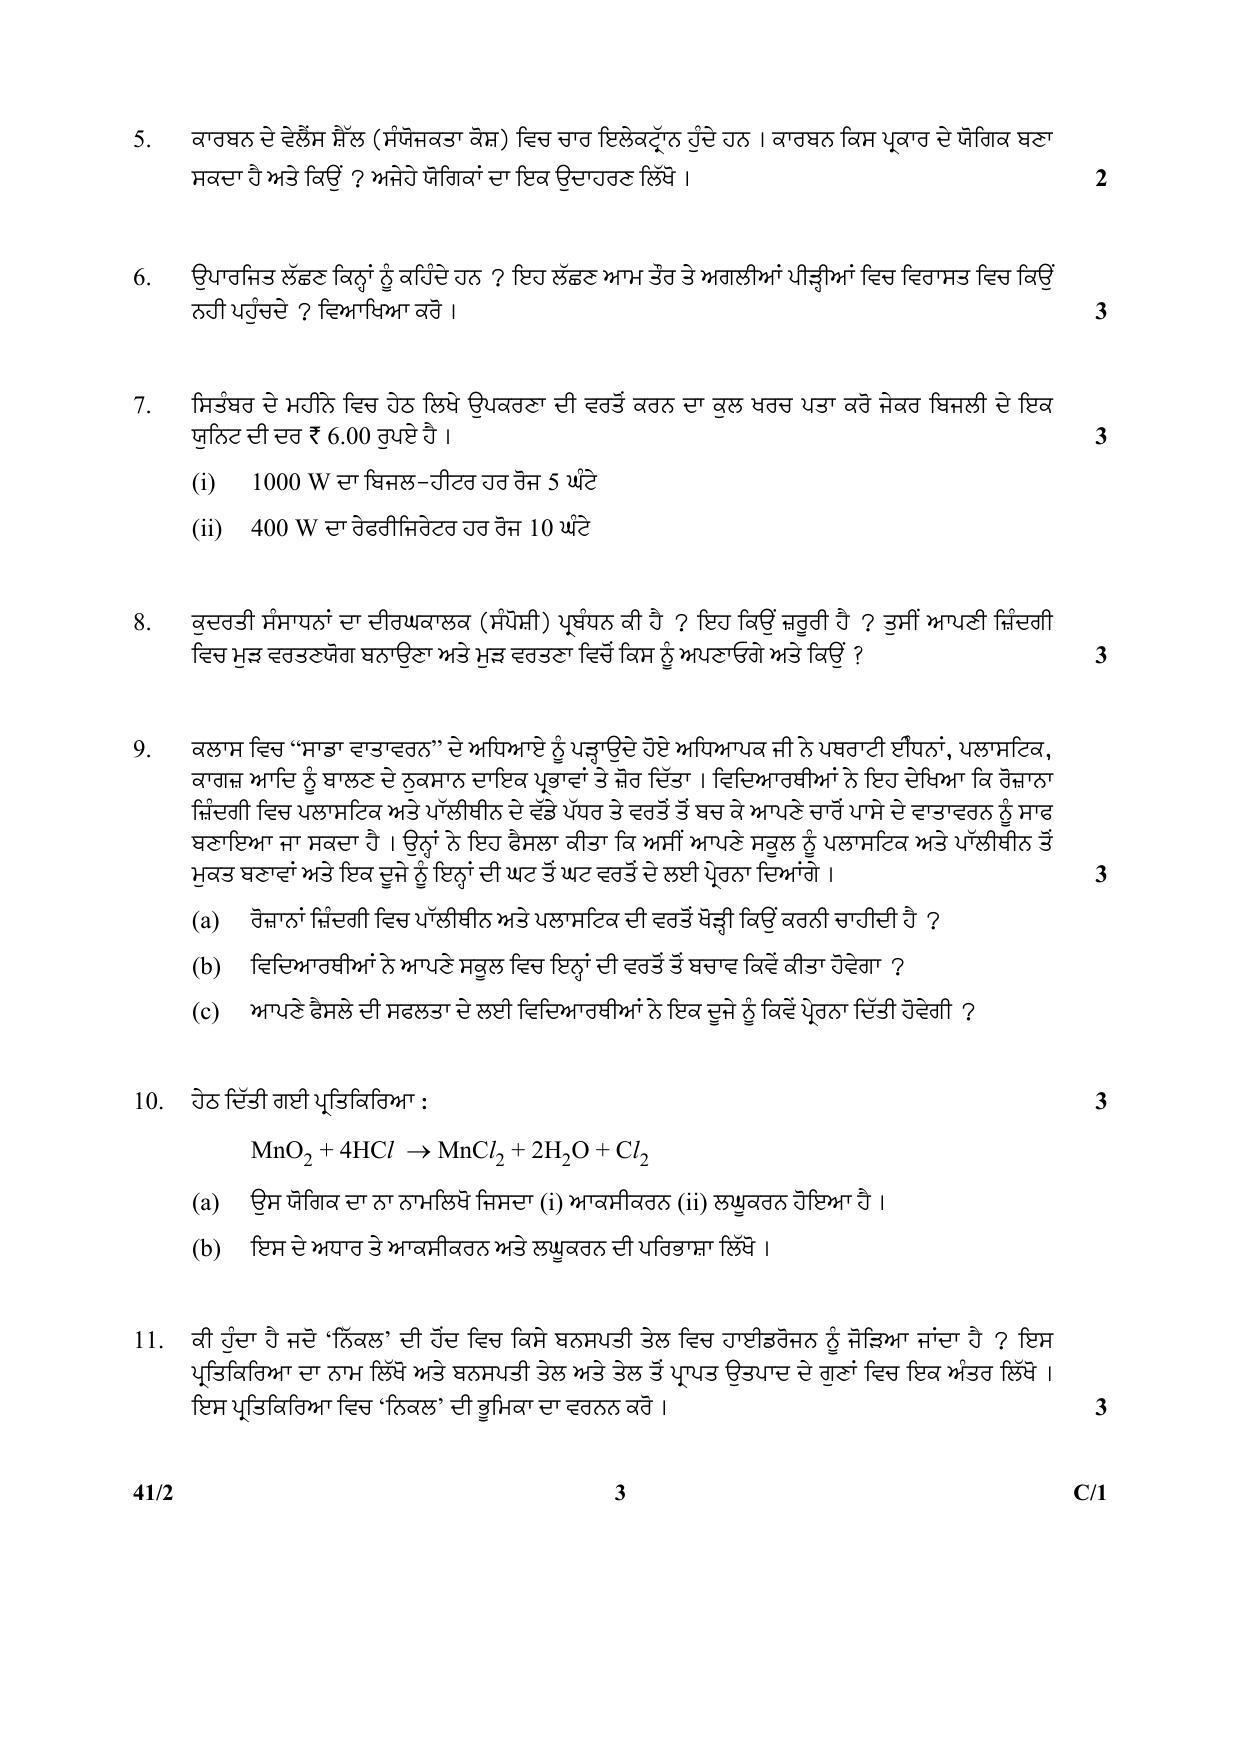 CBSE Class 10 41-2 Science PUNJABI VERSION 2018 Compartment Question Paper - Page 3